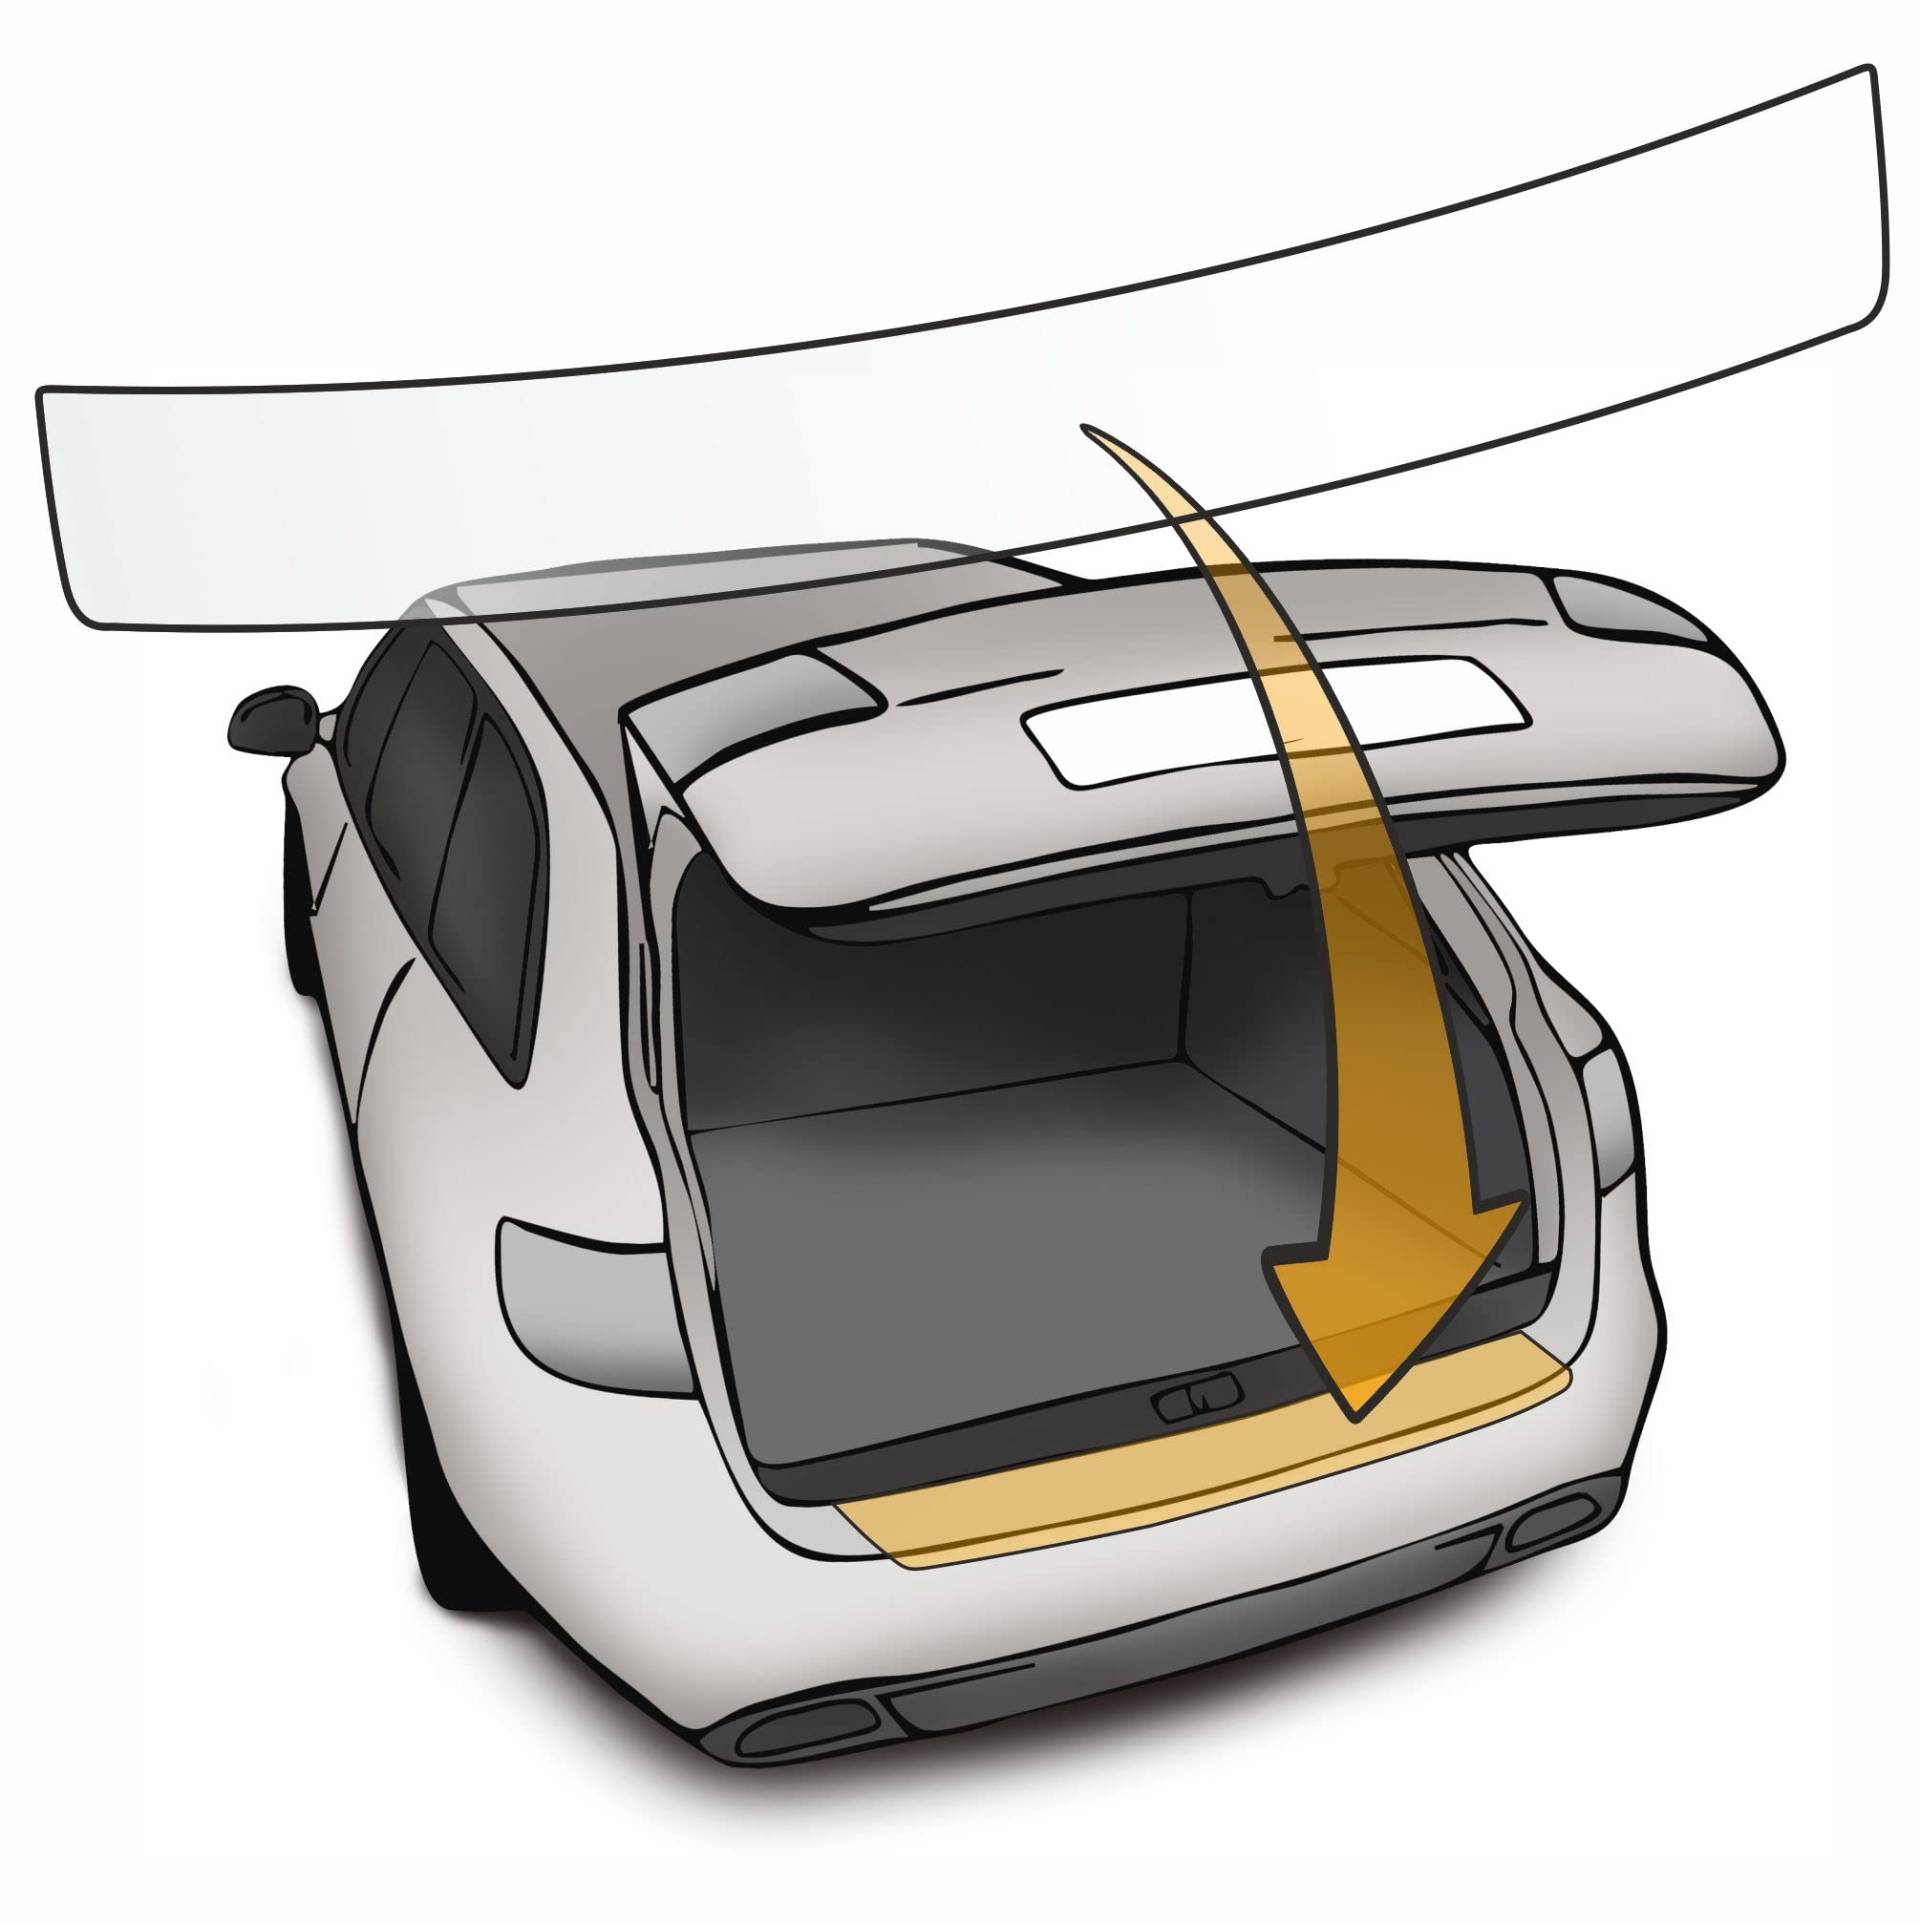 Lackschutzshop - Passform Lackschutzfolie kompatibel mit Ladekantenschutz passend für VW Golf 8 / VIII Limousine – transparent 150µm von Lackschutzshop